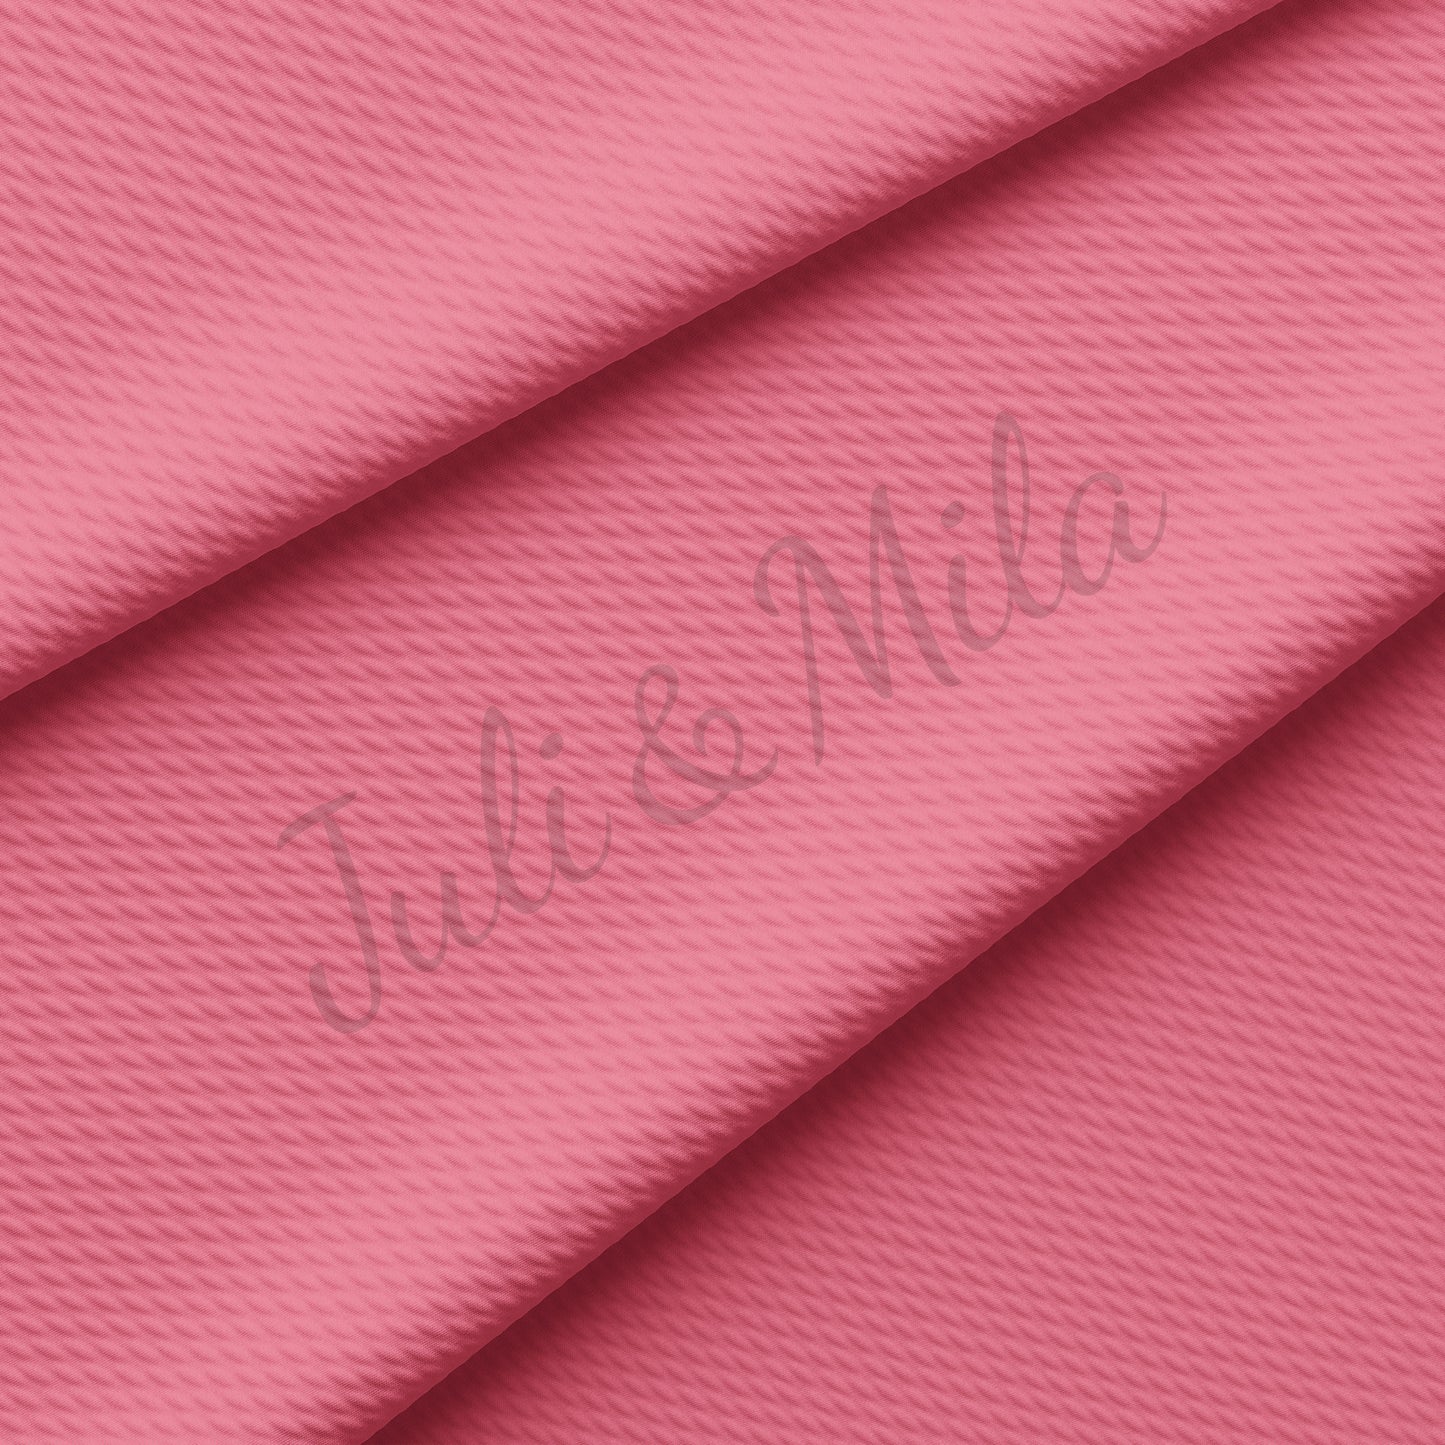 Medium Pink Liverpool Bullet Textured Fabric